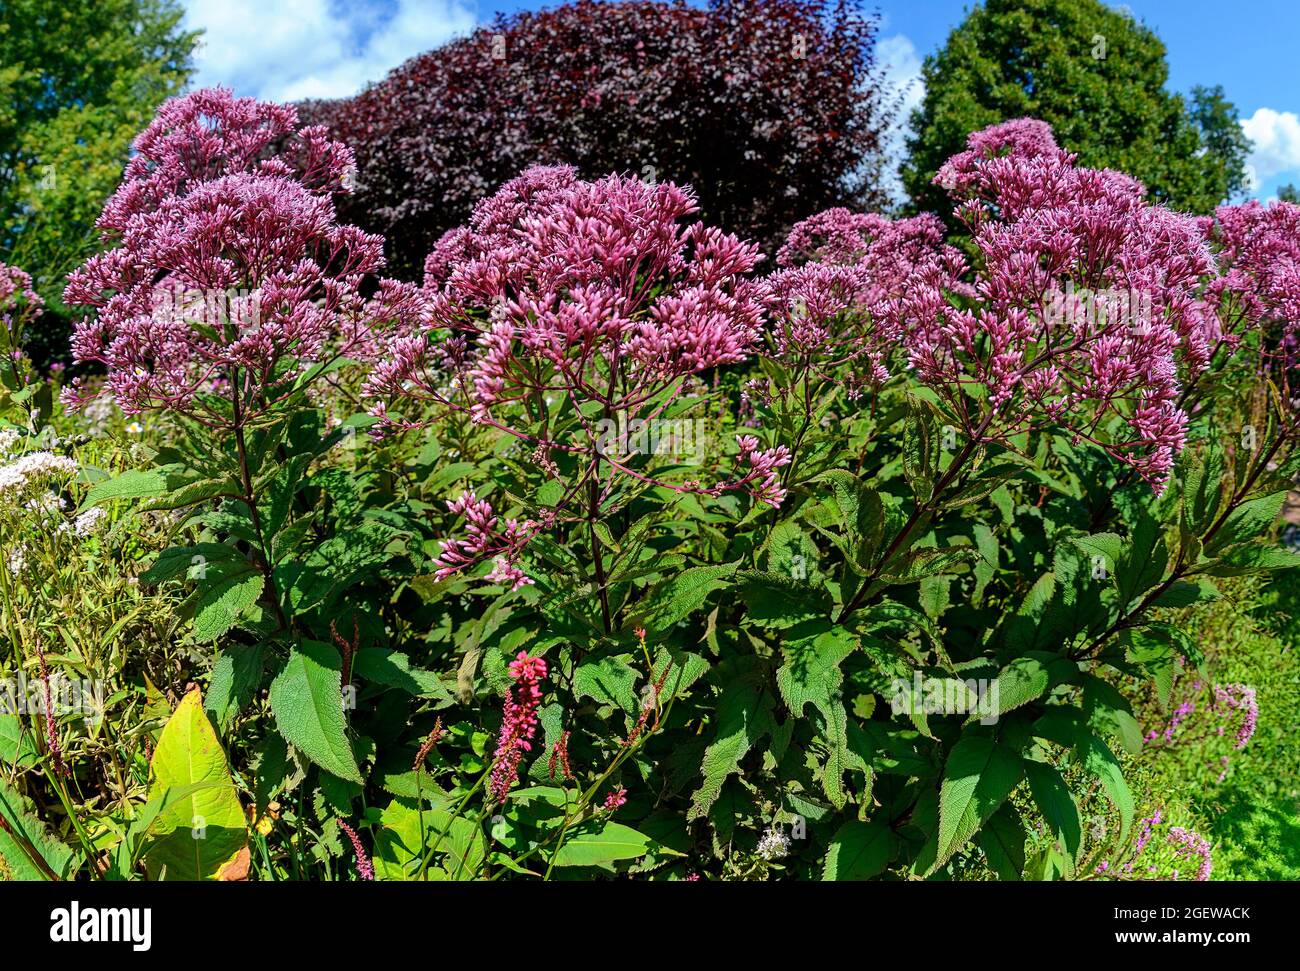 blossom of the plant purple Joe-Pye weed at sunshine Stock Photo